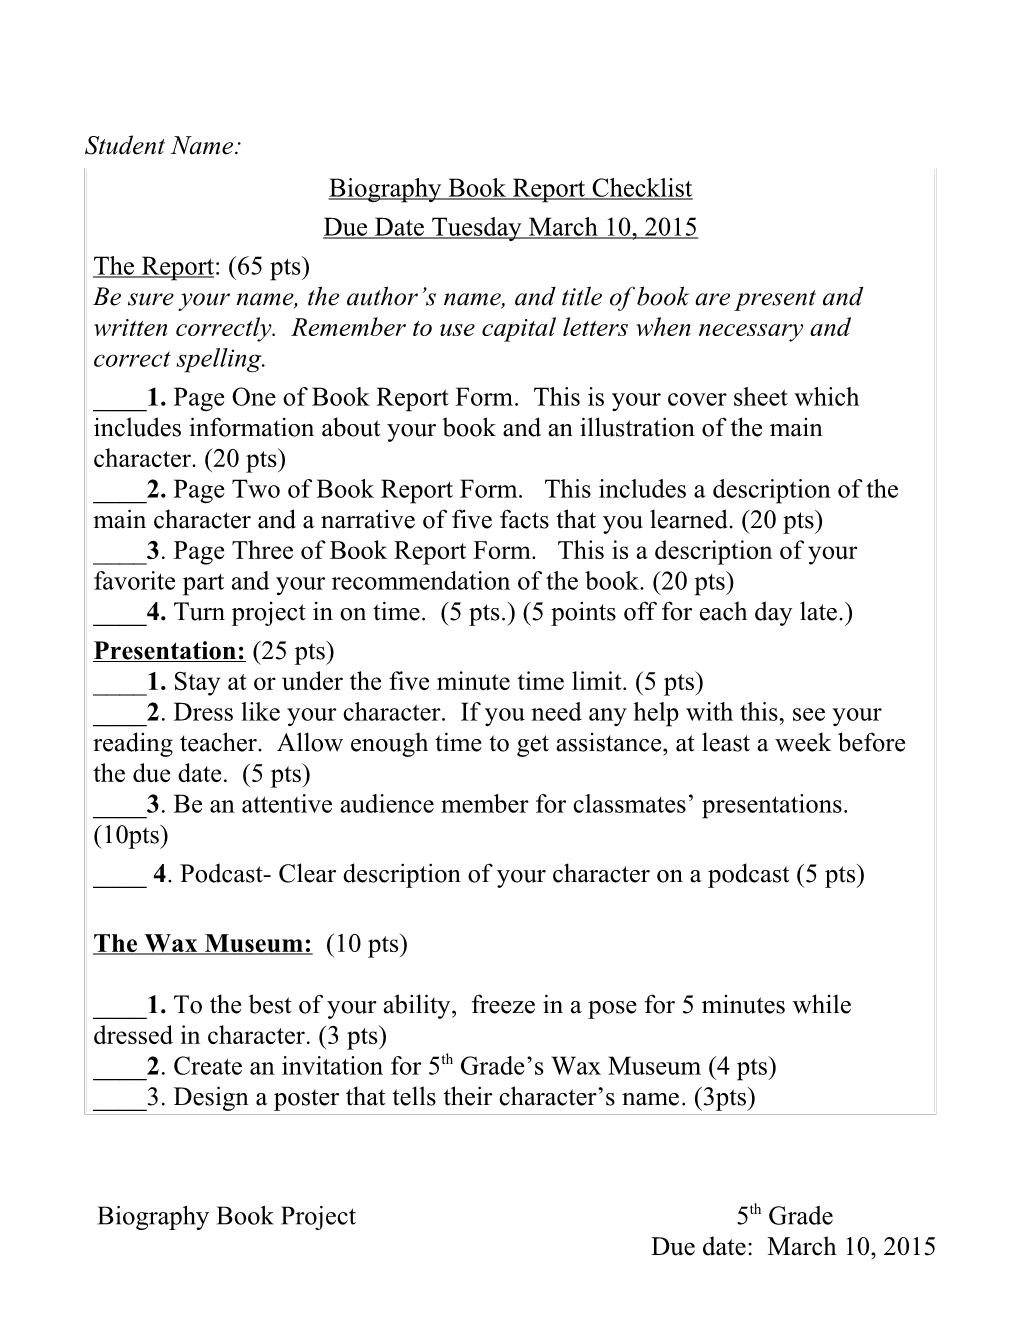 Biography Book Report Checklist